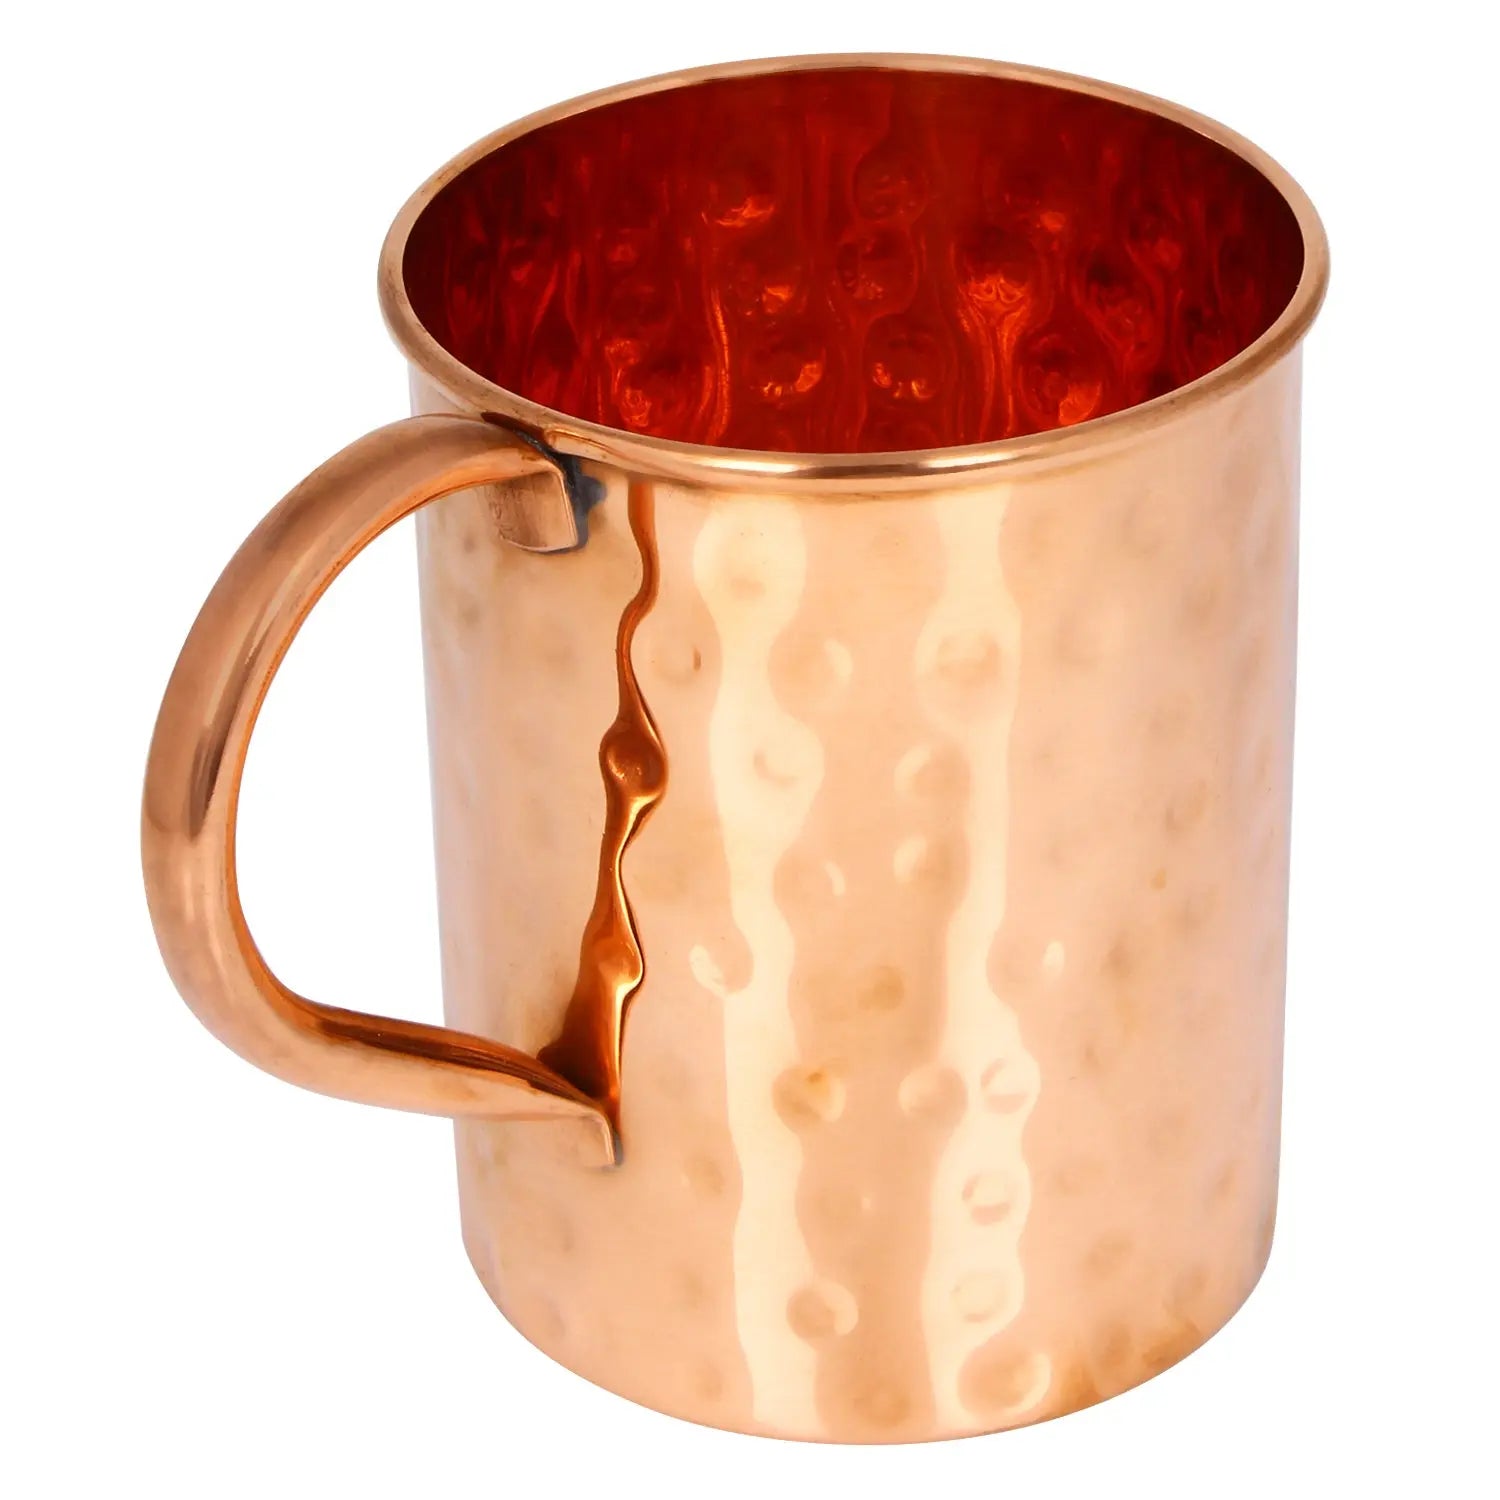 Crockery Wala And Company Copper Hammered Glass Mug Cup Copper Glass Tumbler, Mug With Handle 400 ML, 1 Pc - CROCKERY WALA AND COMPANY 